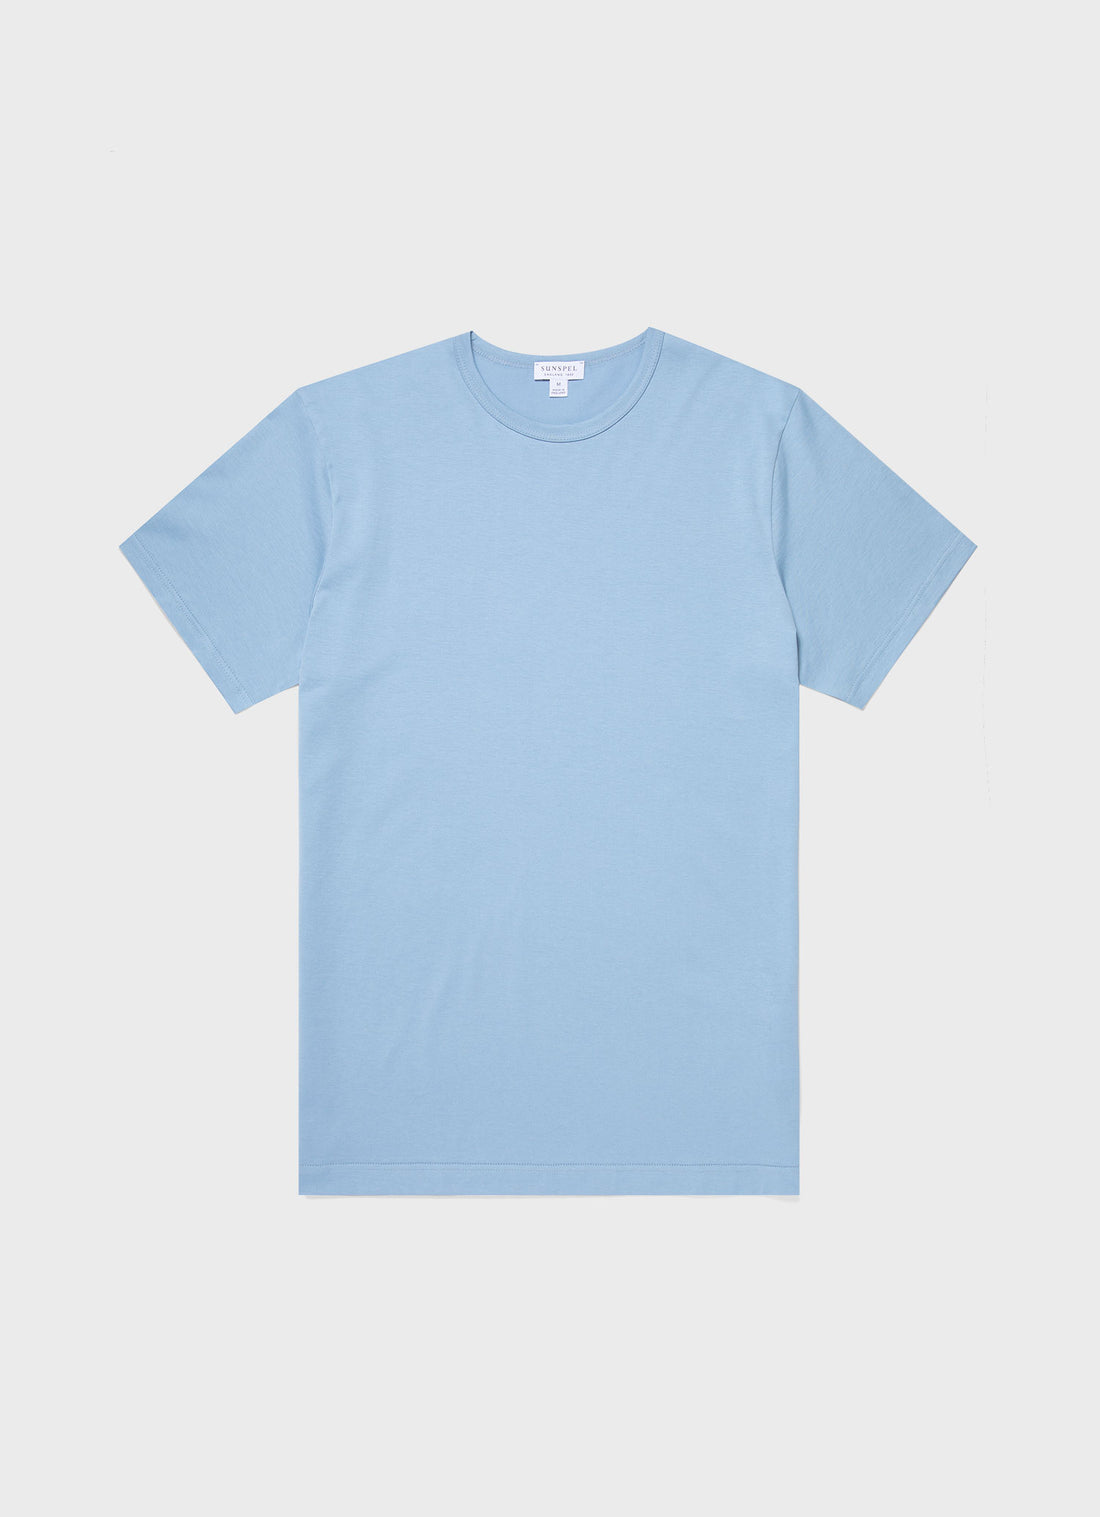 Men's Classic T-shirt in Sky Blue